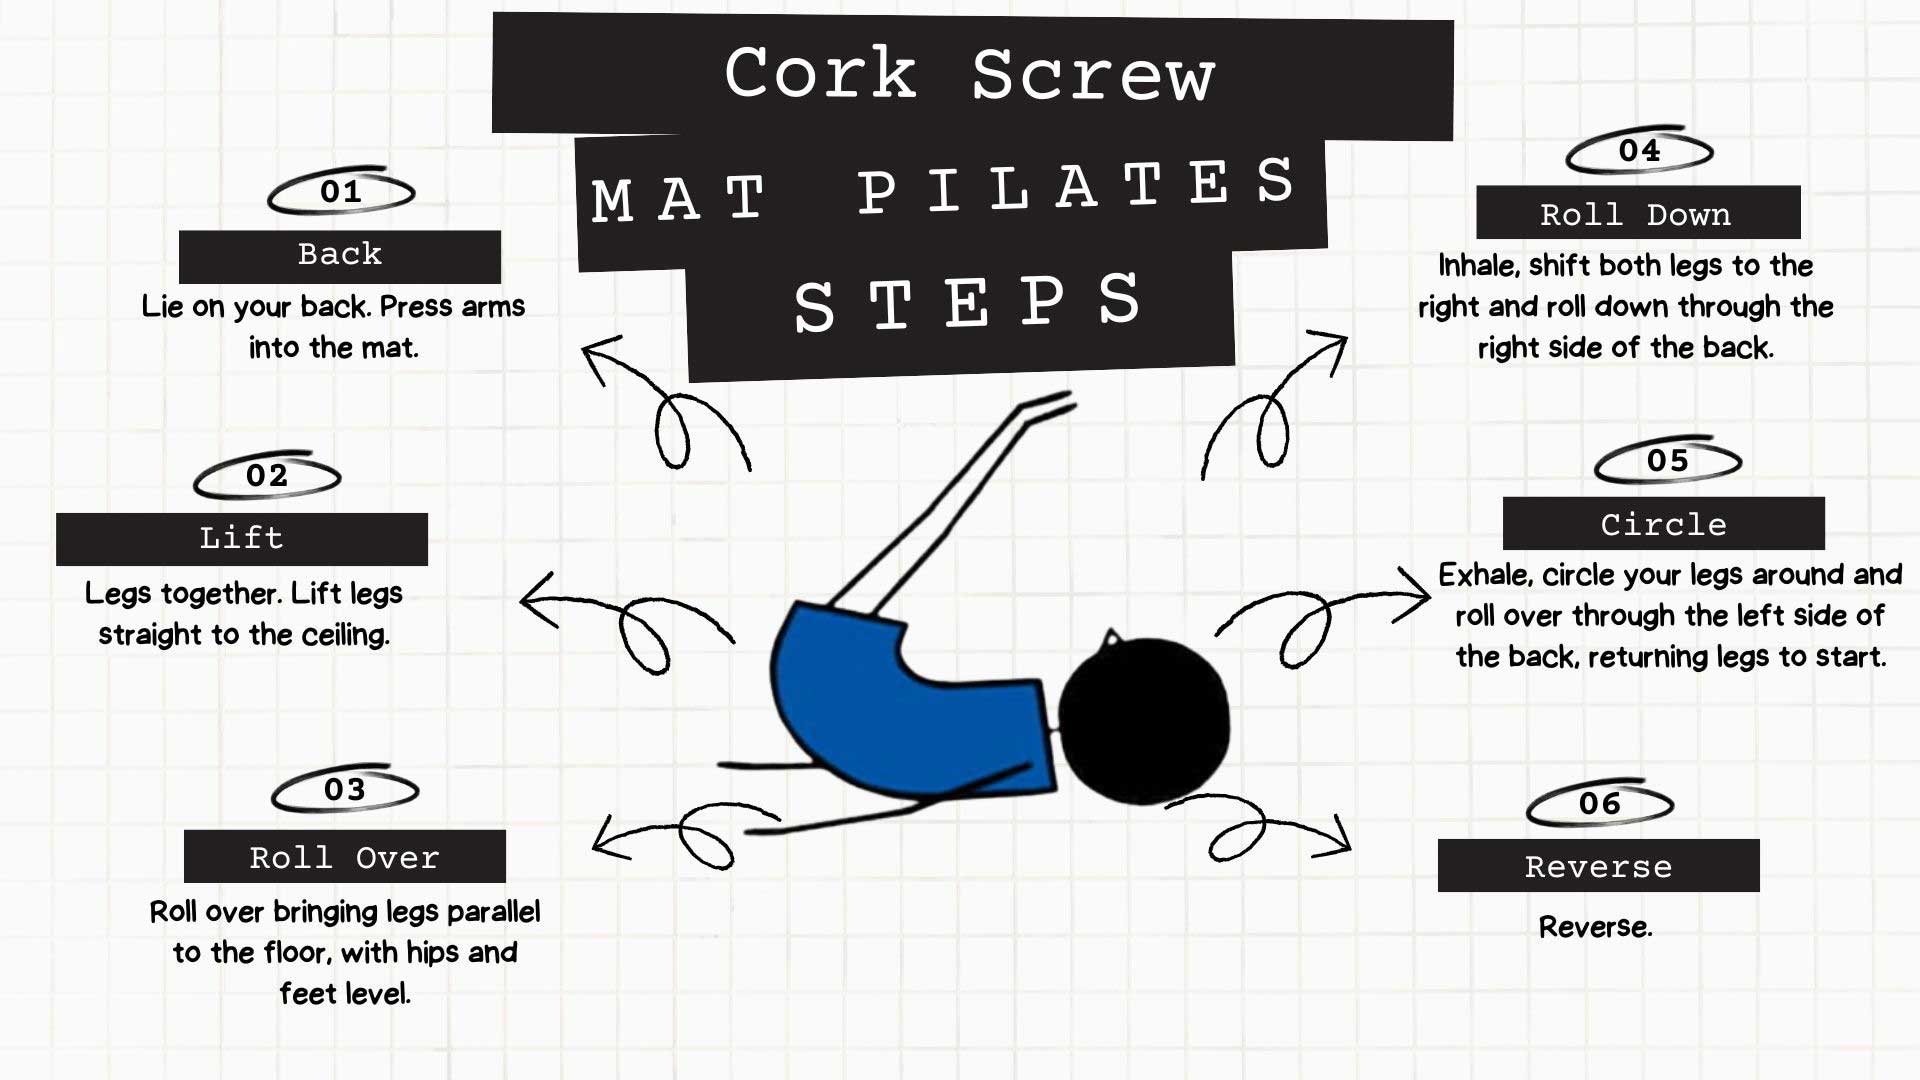 Cork Screw Pilates Steps Infographic